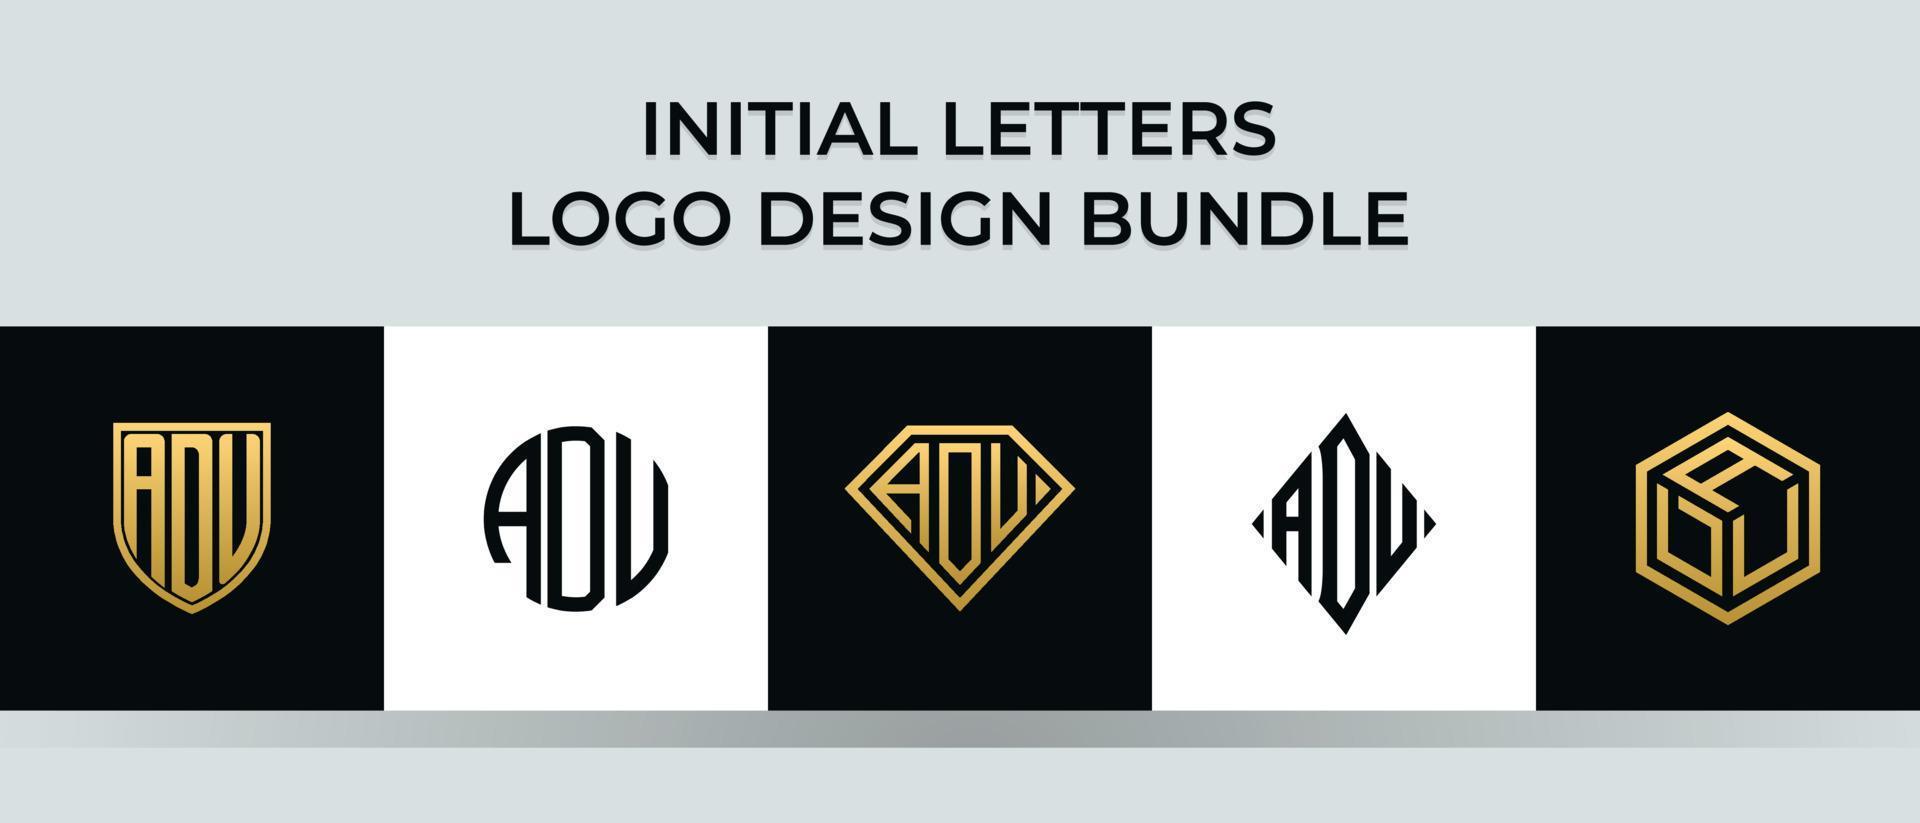 lettere iniziali adu logo design bundle vettore